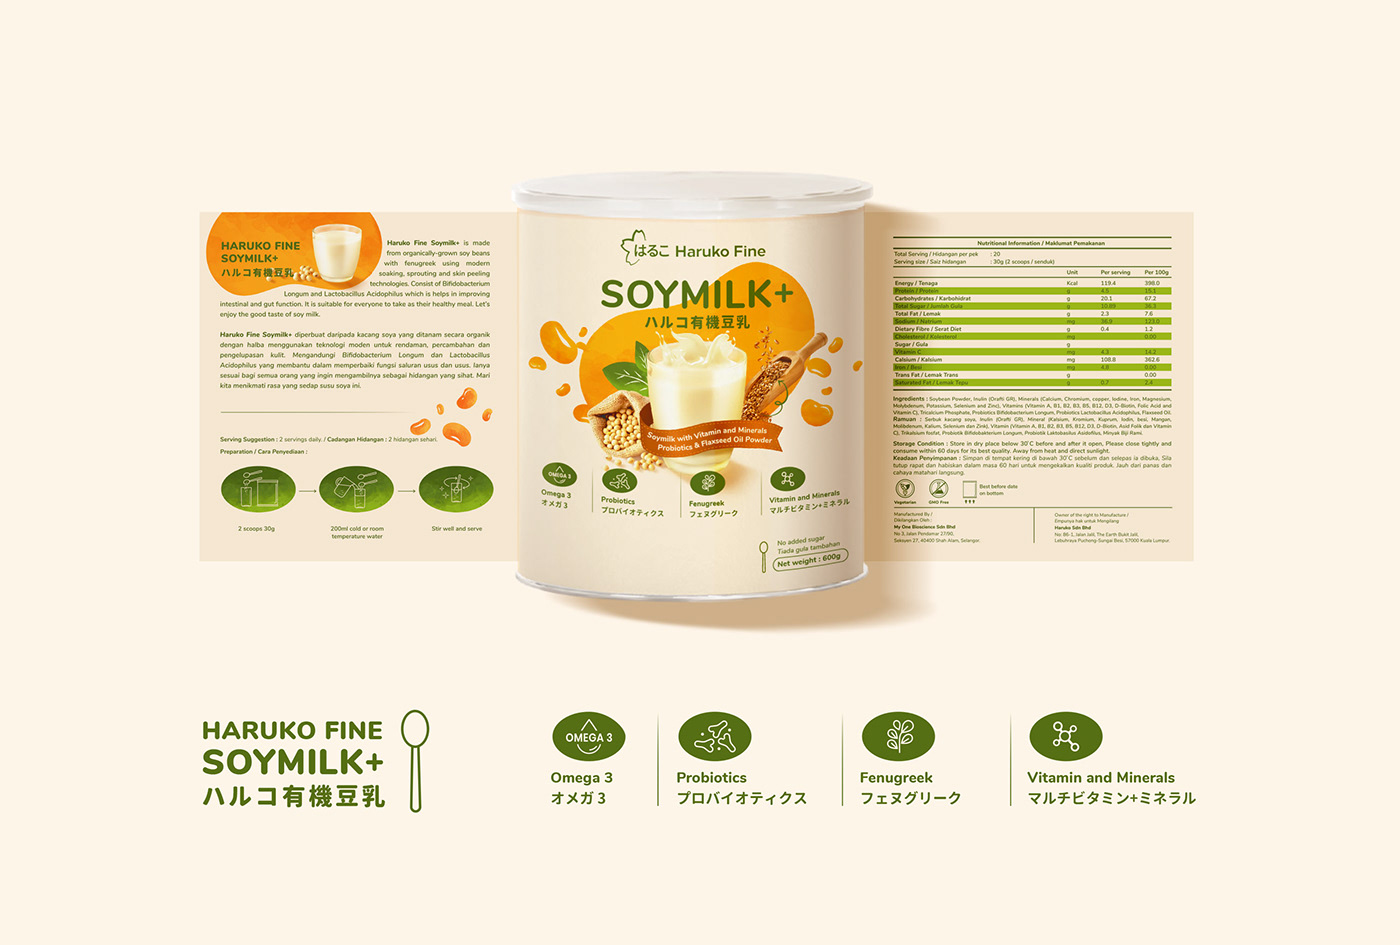 Brand Design health & wellness kuala lumpur malaysia organic Packaging soymilk beverage Label